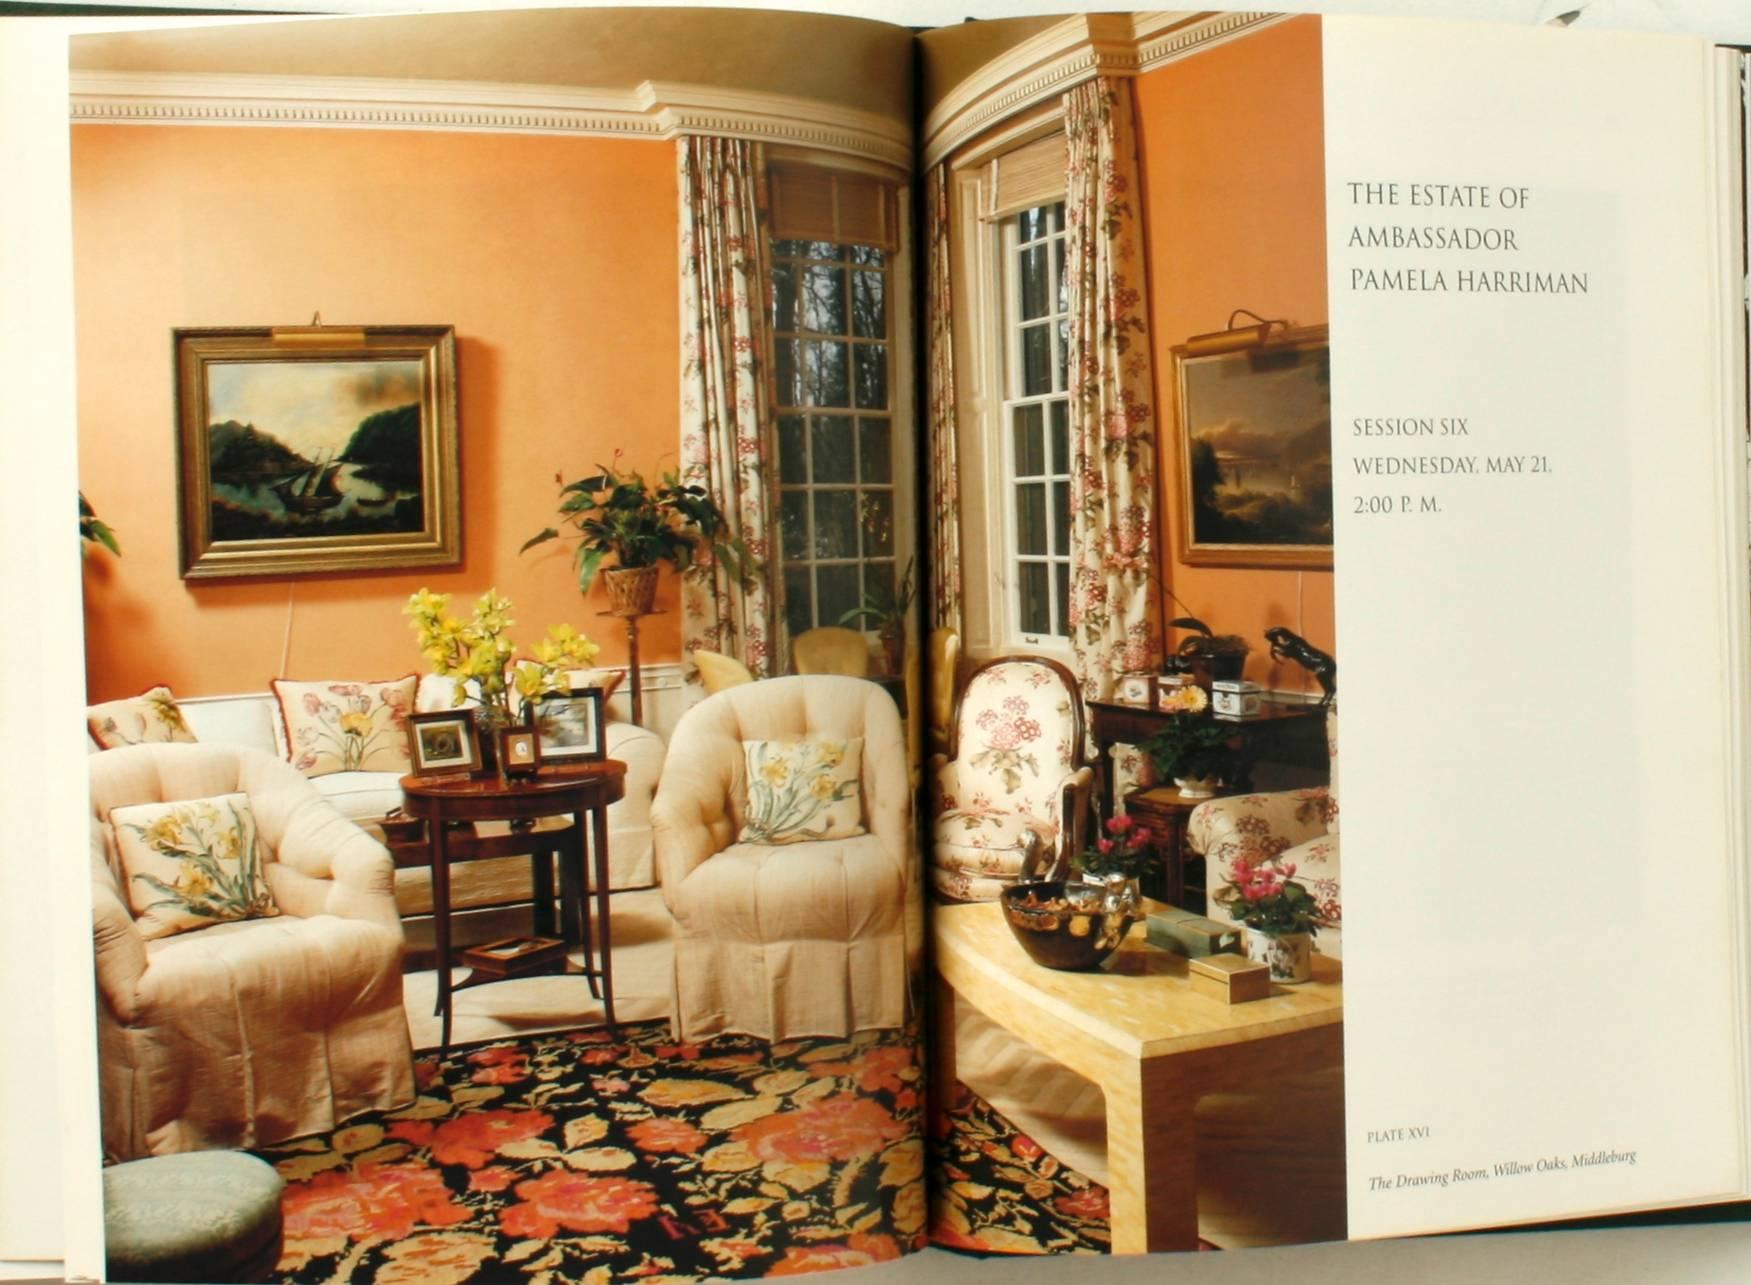 Paper Auction Catalogue from the Estate of Ambassador Pamela Harriman